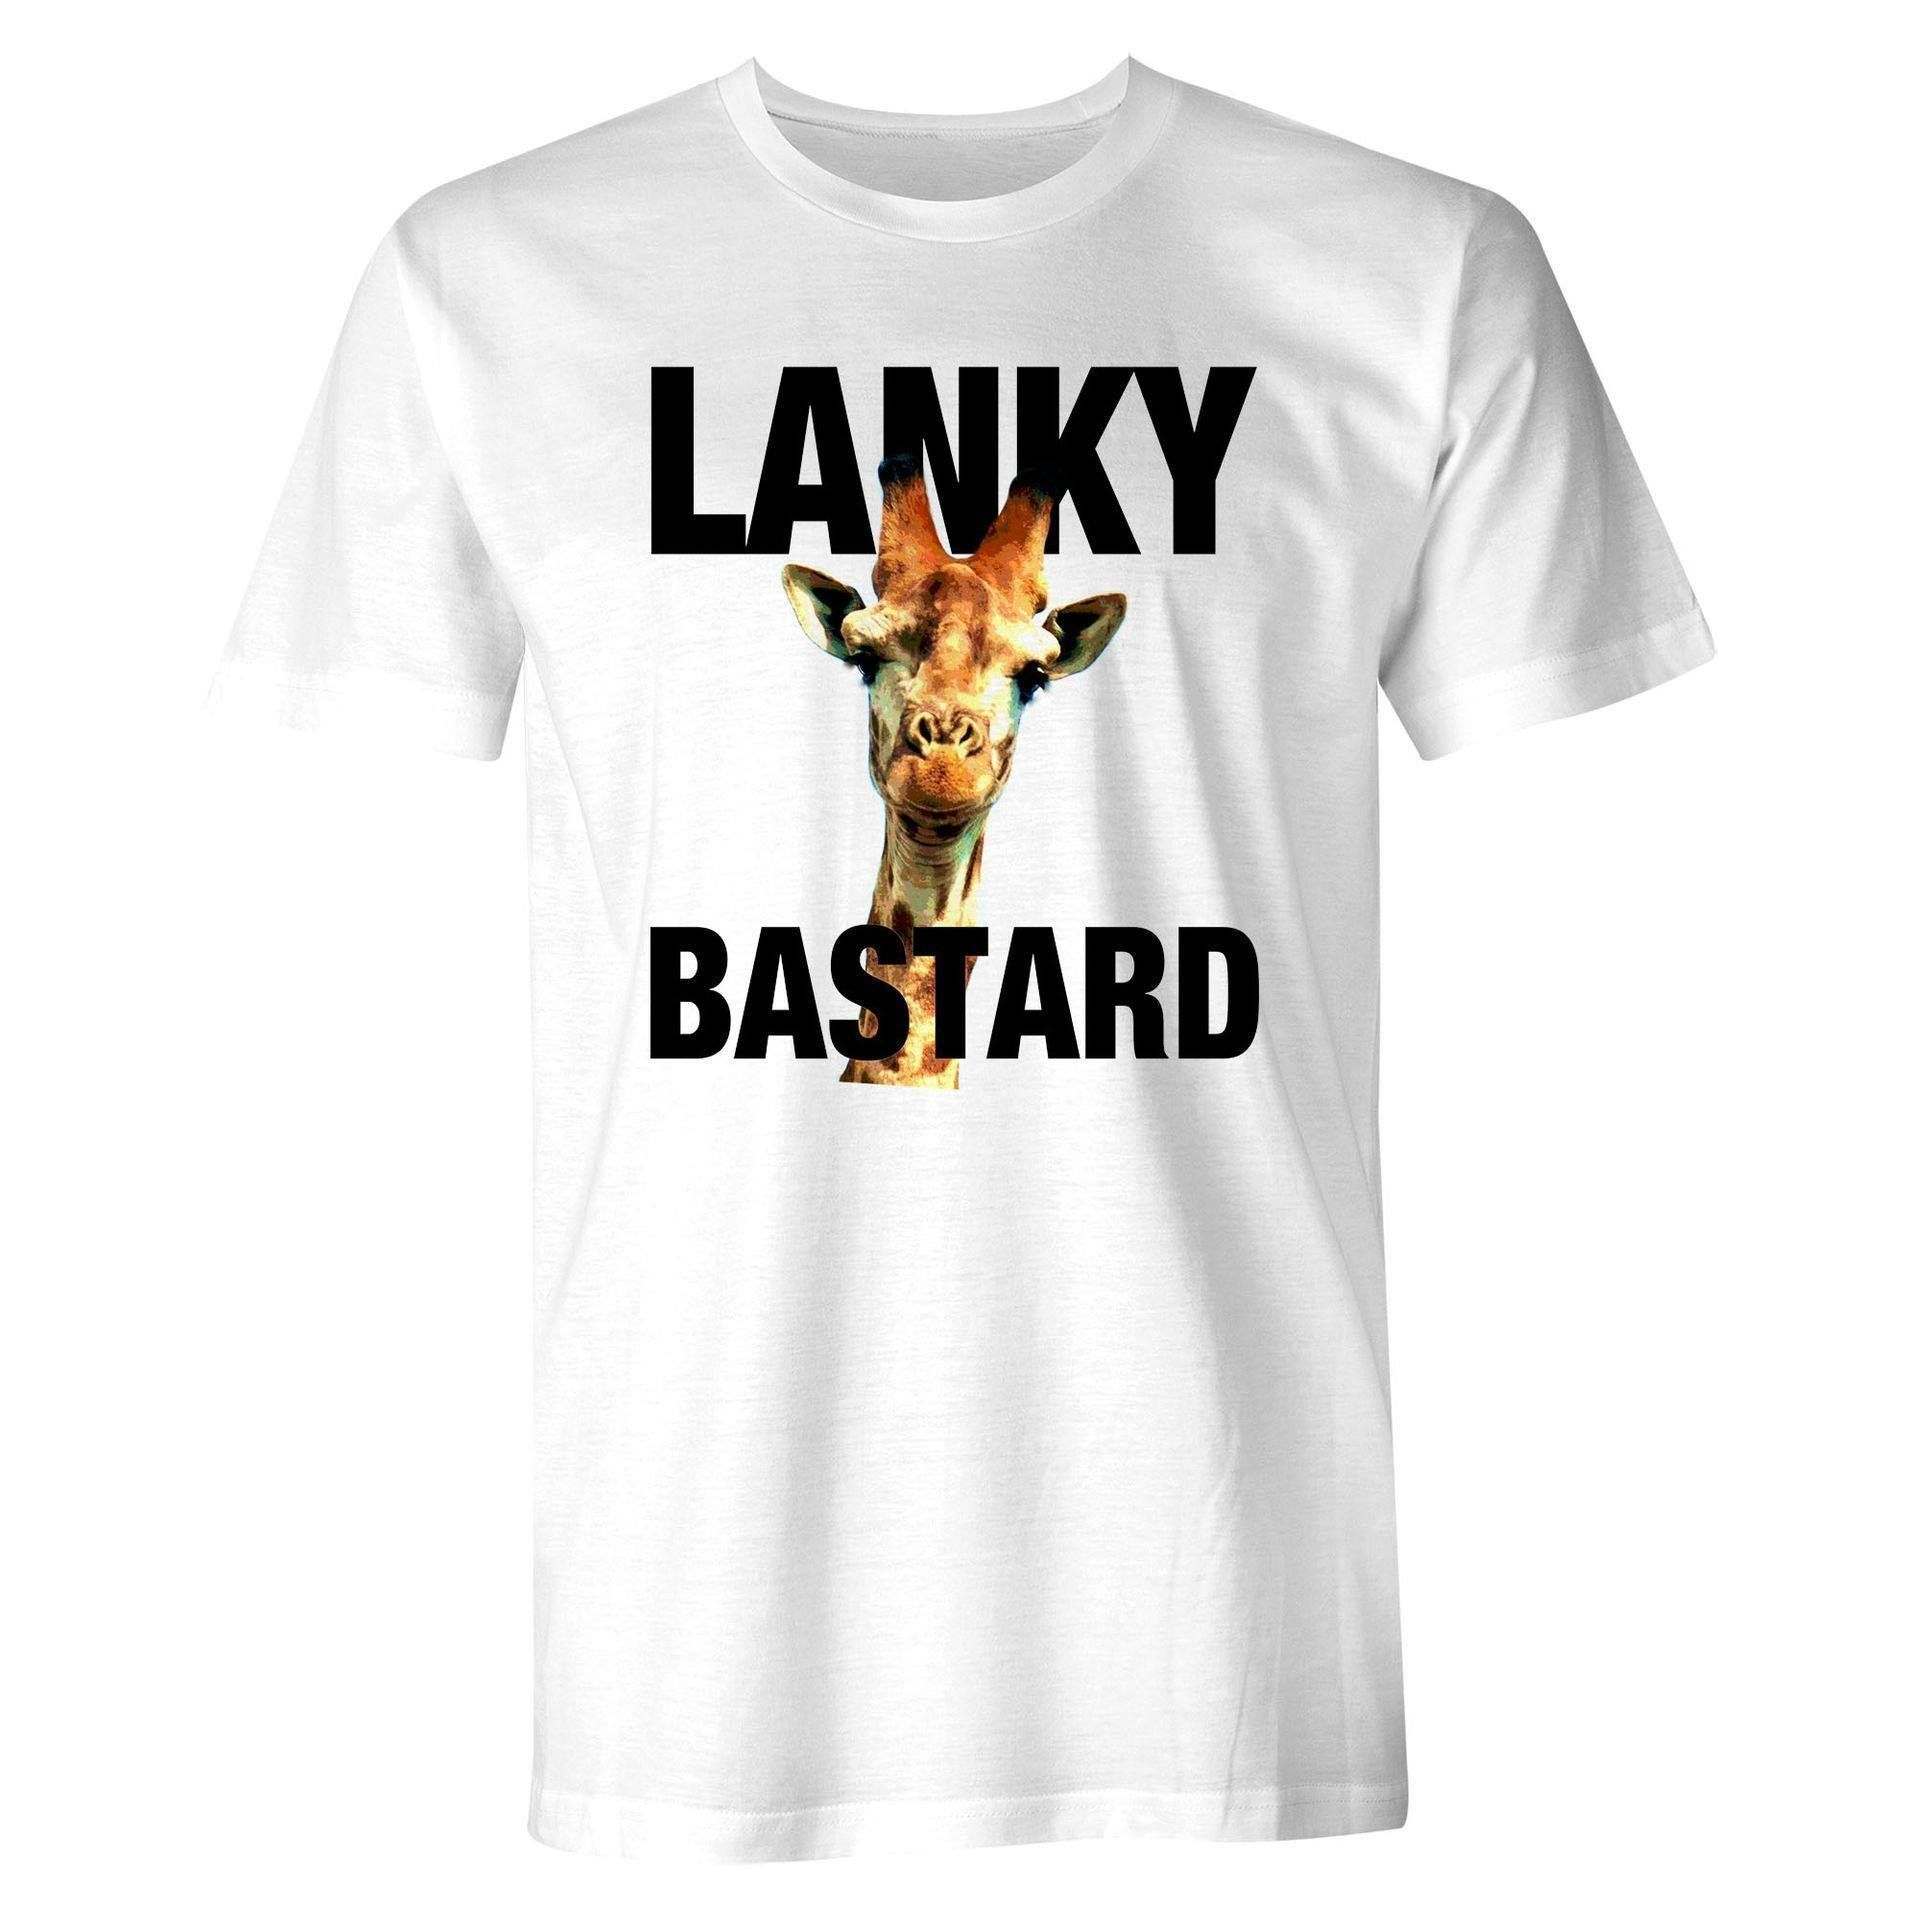 Funny Giraffe - Lanky bastard